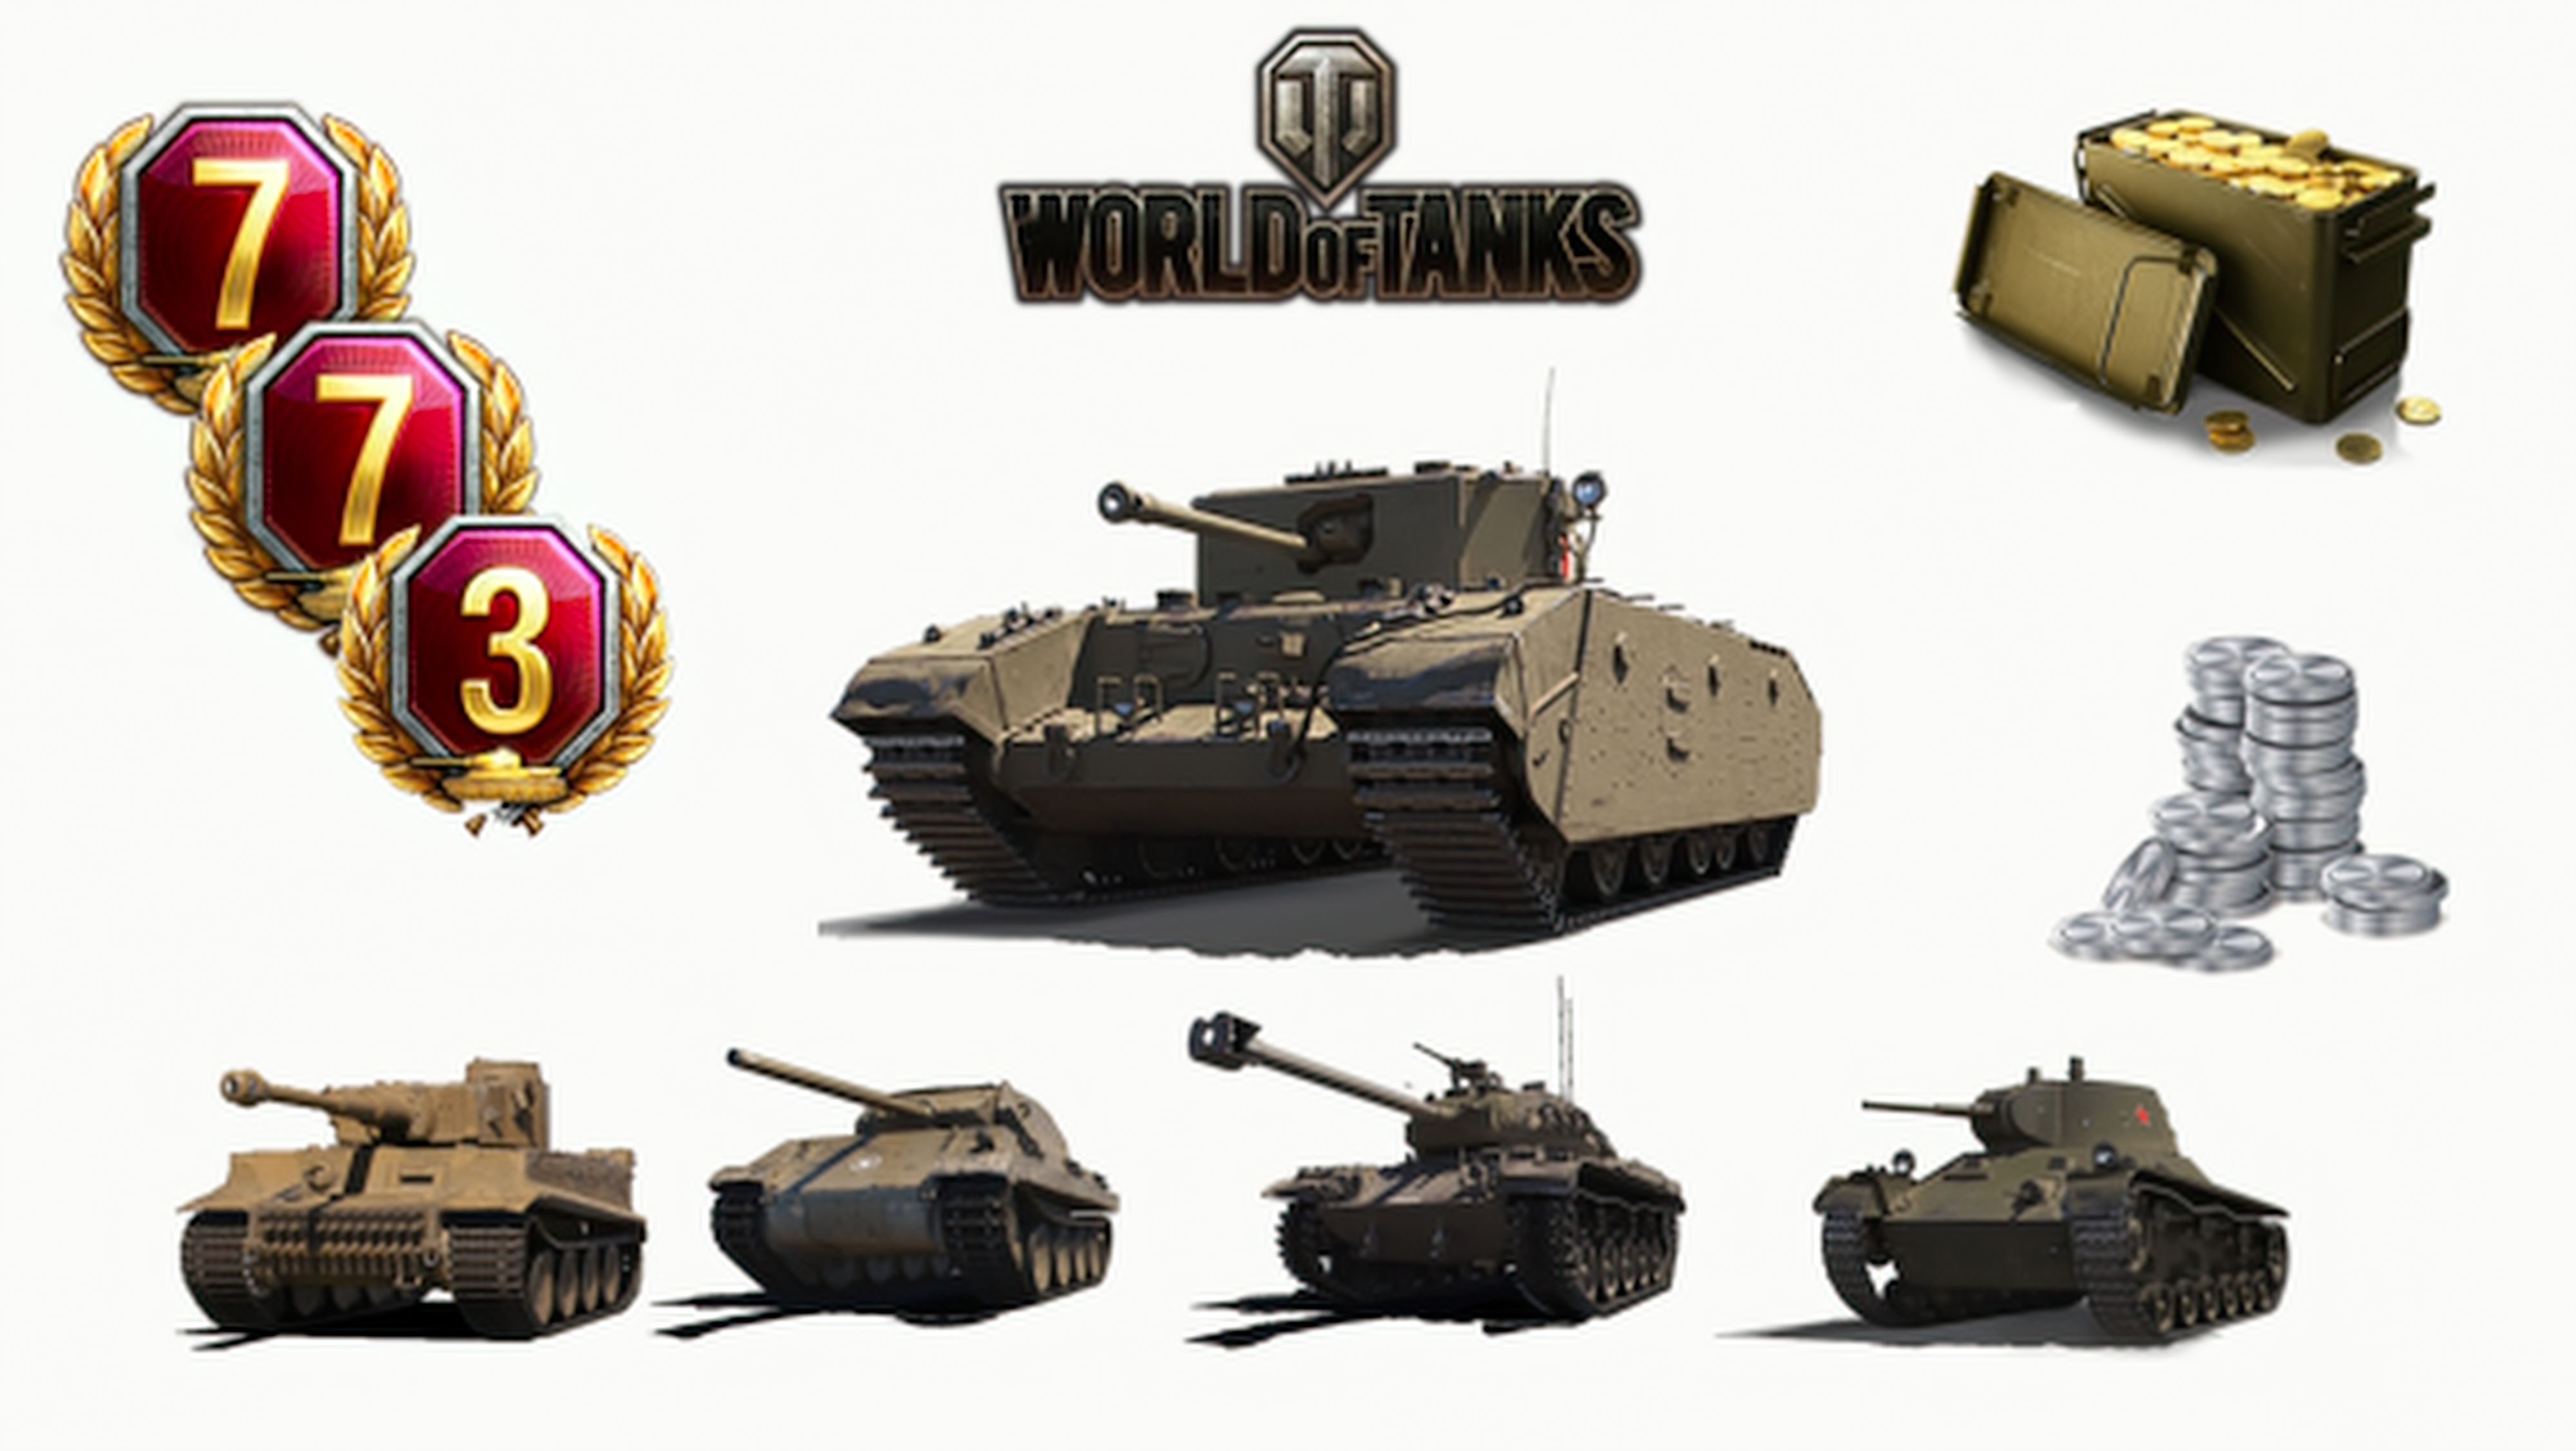 Инвайт код для World of Tanks 2020 на премиум танк Excelsior, золото и премиум аккаунт DRIVETRIBE.